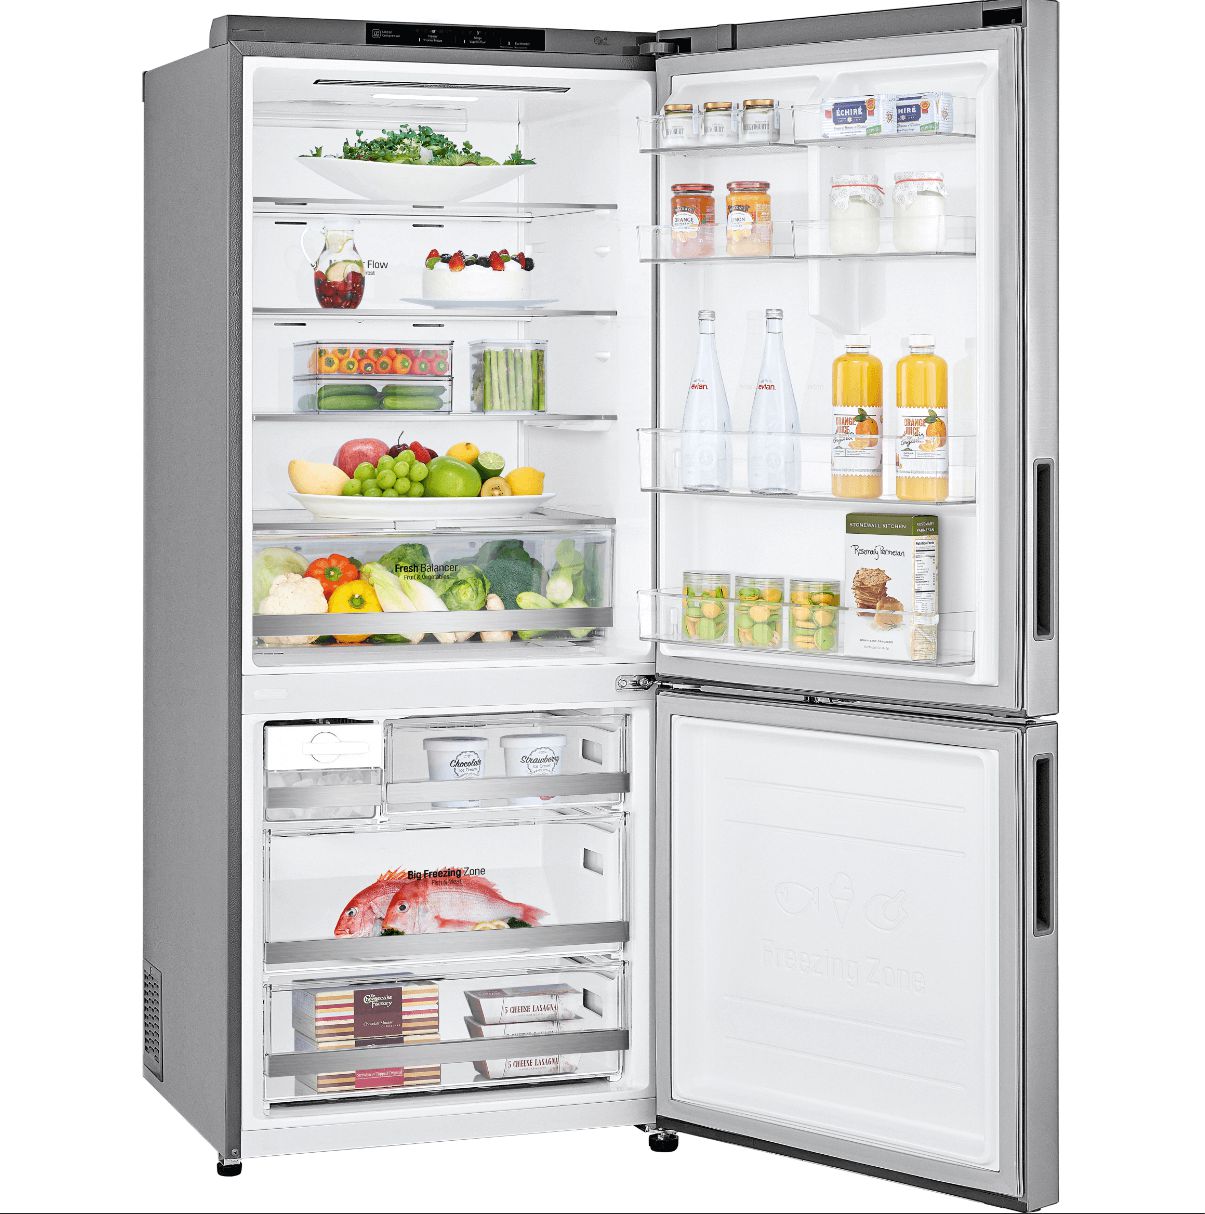 LG 28 Inch Bottom Freezer Refrigerator in Platinum Silver 14.7 Cu. Ft. (LBNC15231V)